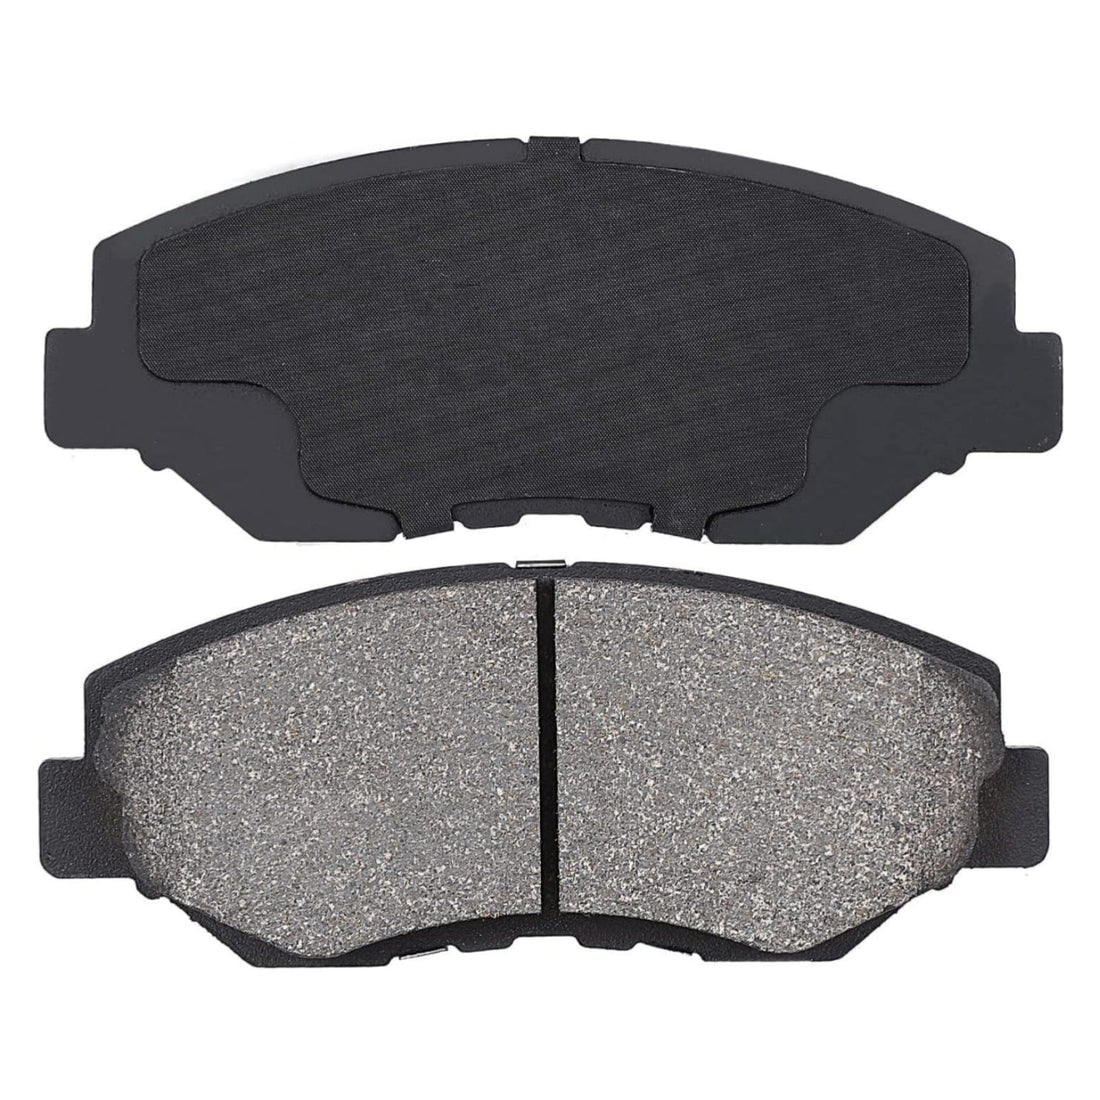 Front Brake Pads 4Pcs Premium Ceramic Replacement Brake Pad Set